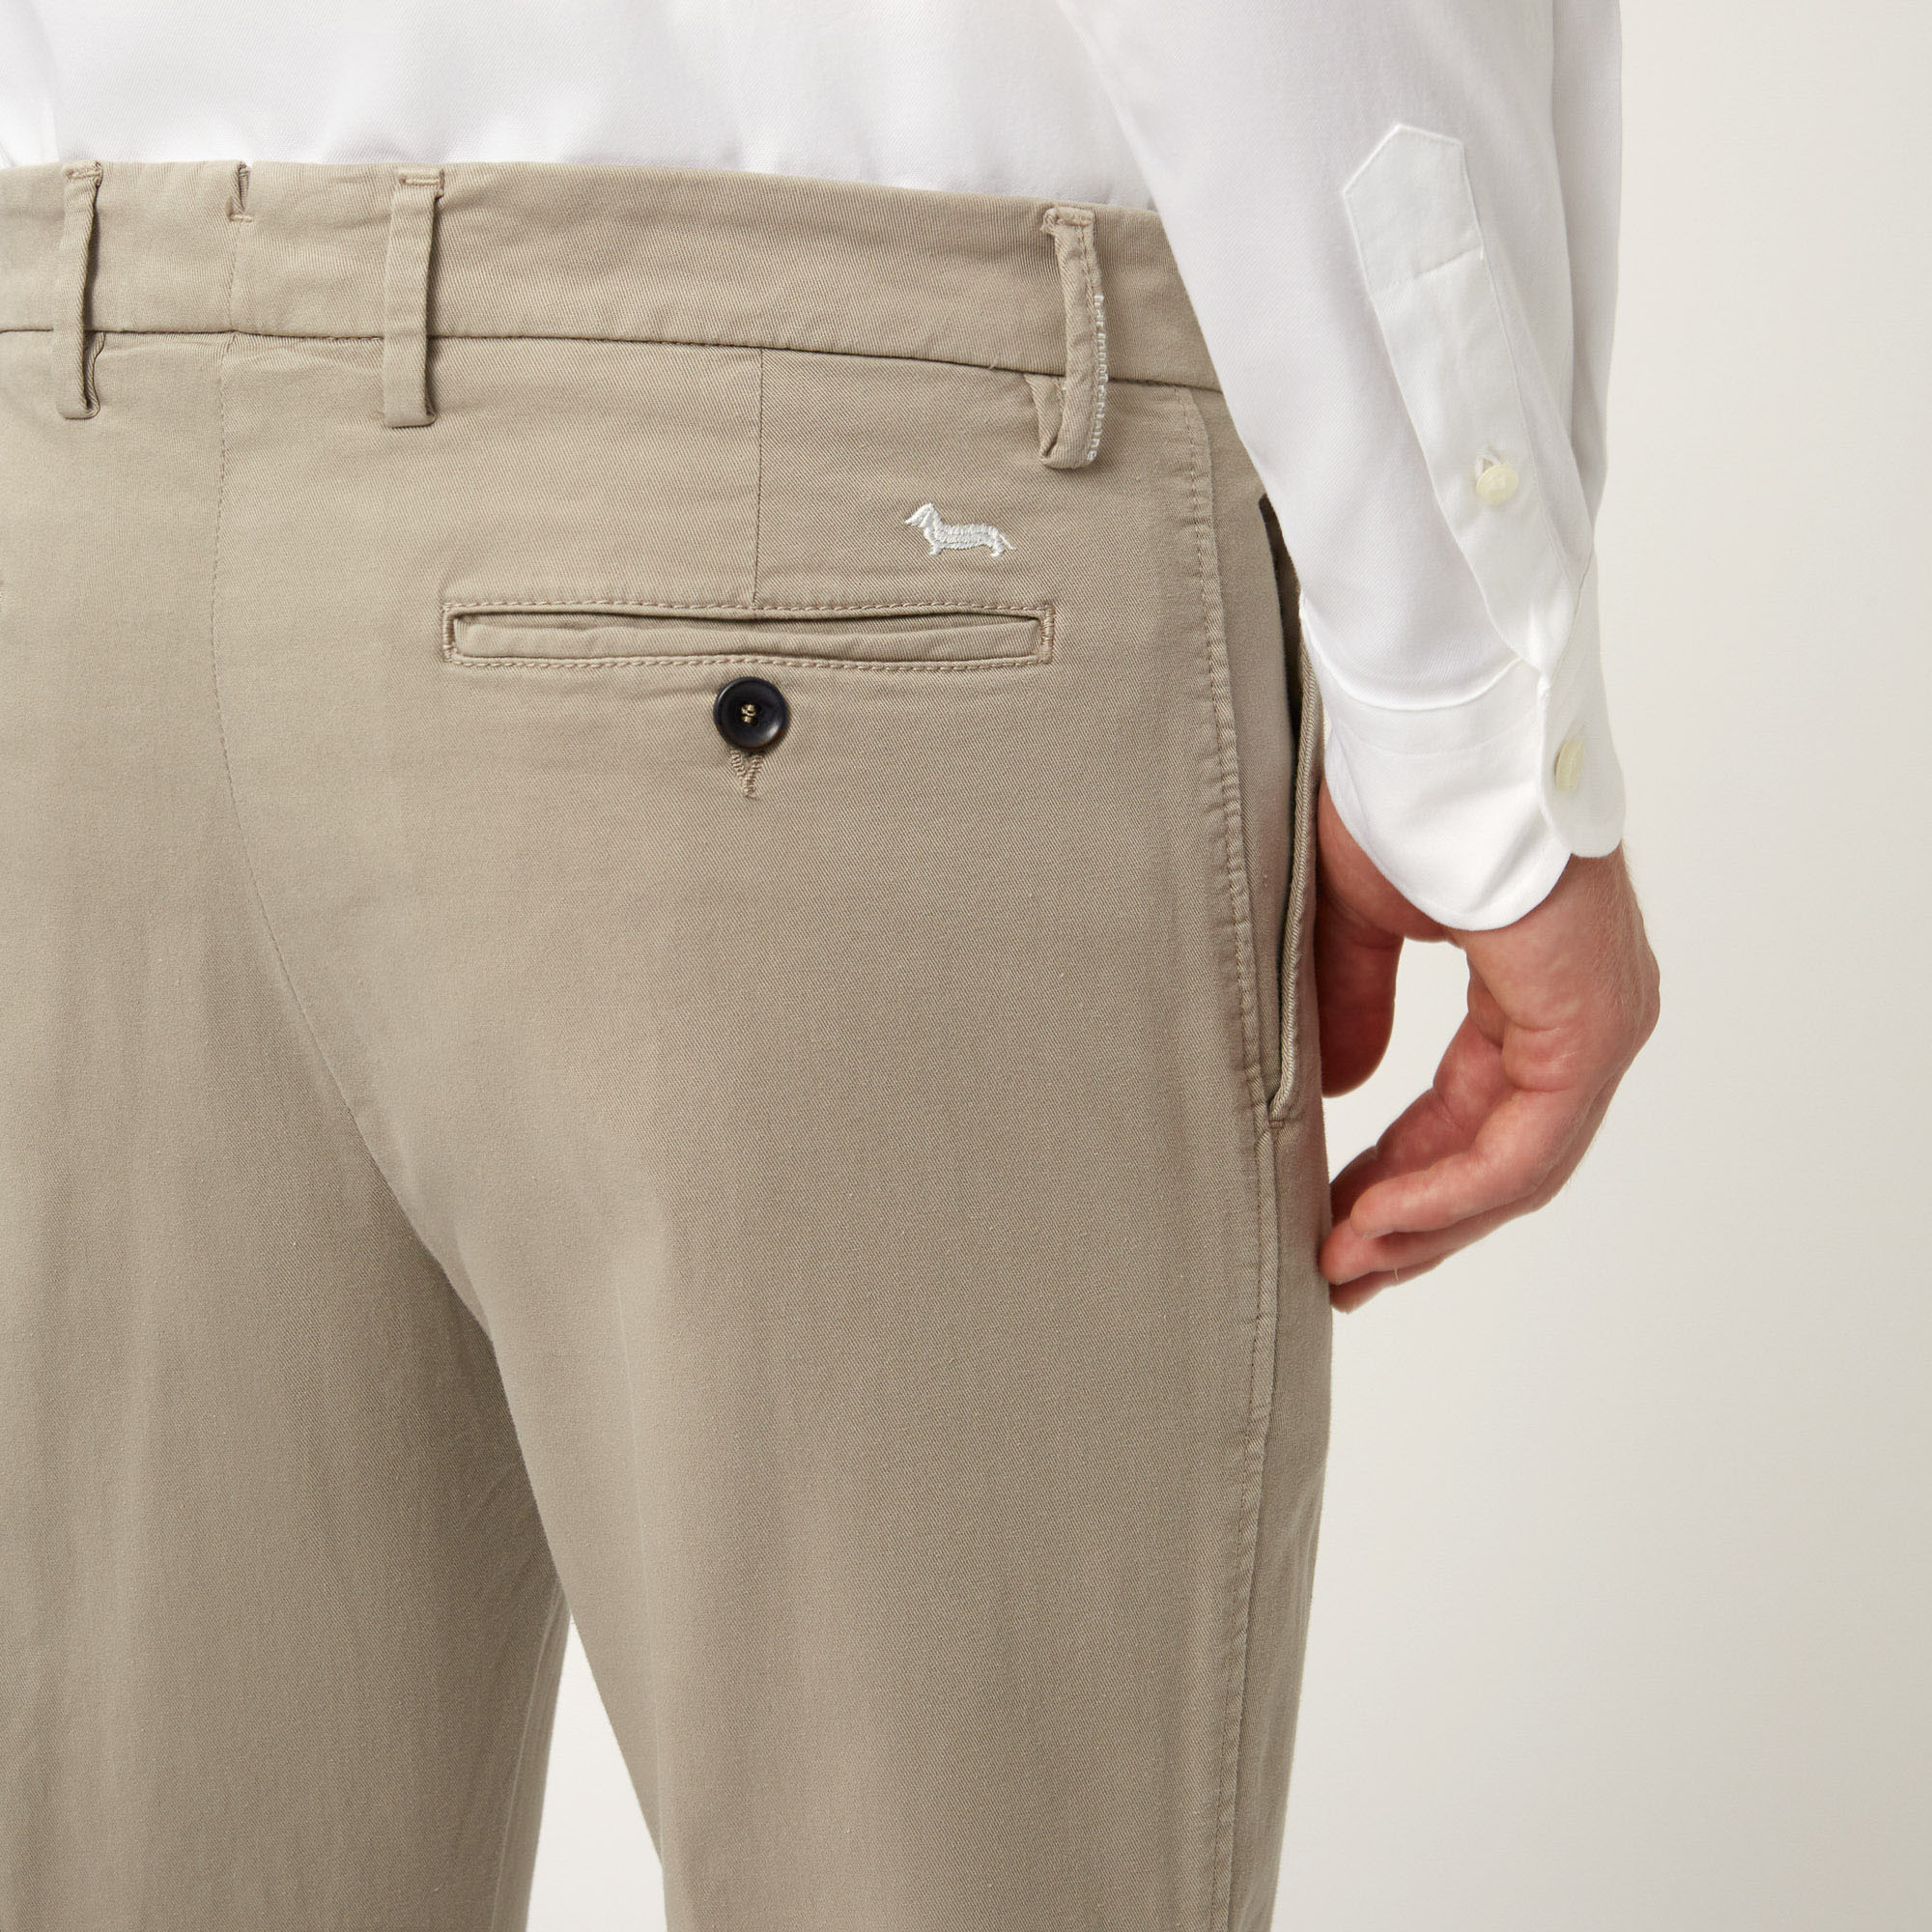 Pantalones Essentials de algodón elástico, Beige, large image number 2